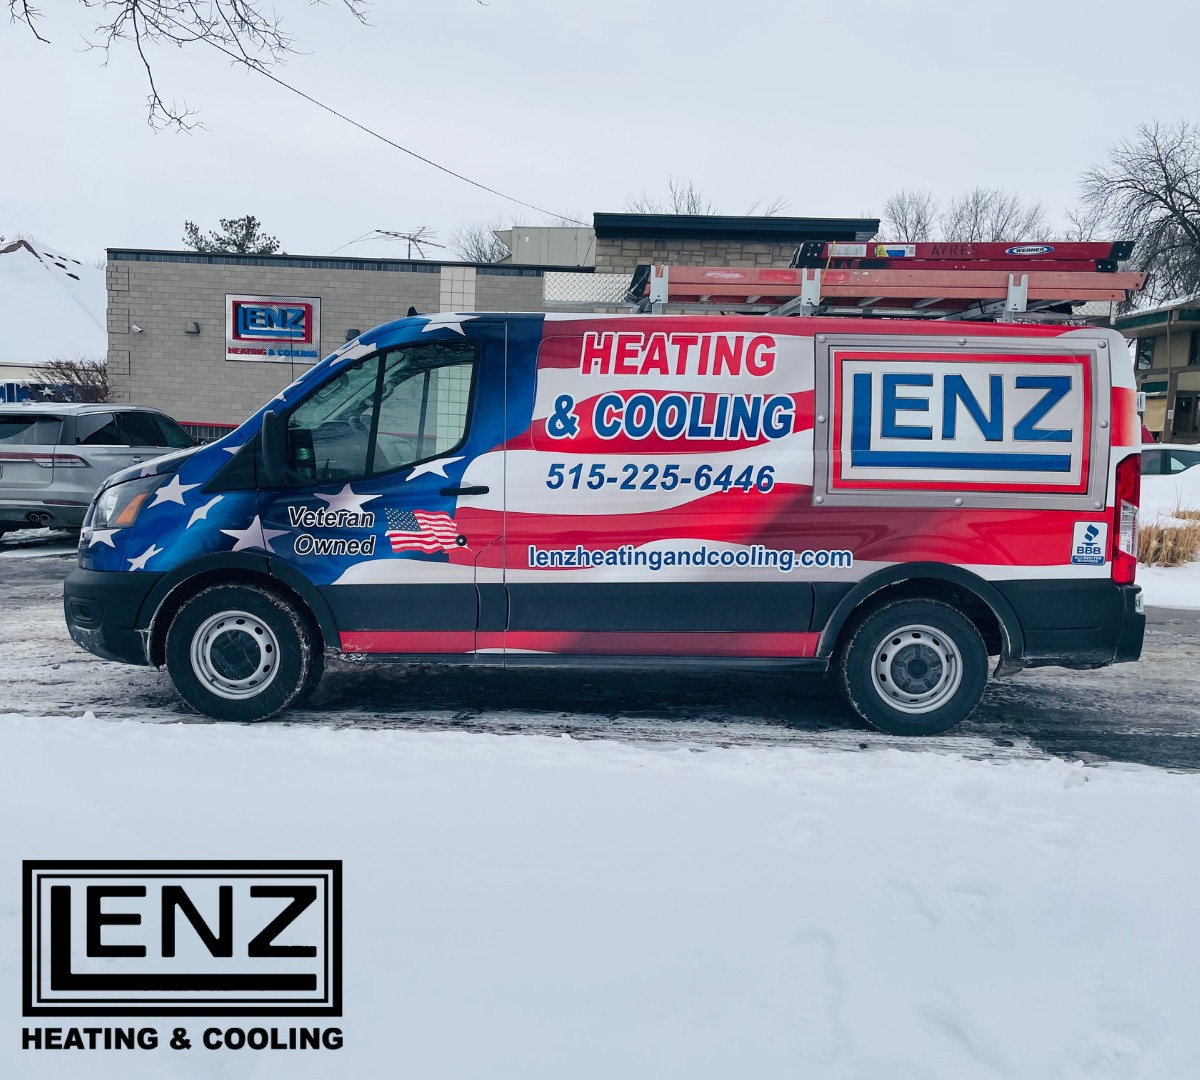 Lenz HVAC service agreement, furnace service, air conditioning service, HVAC compay